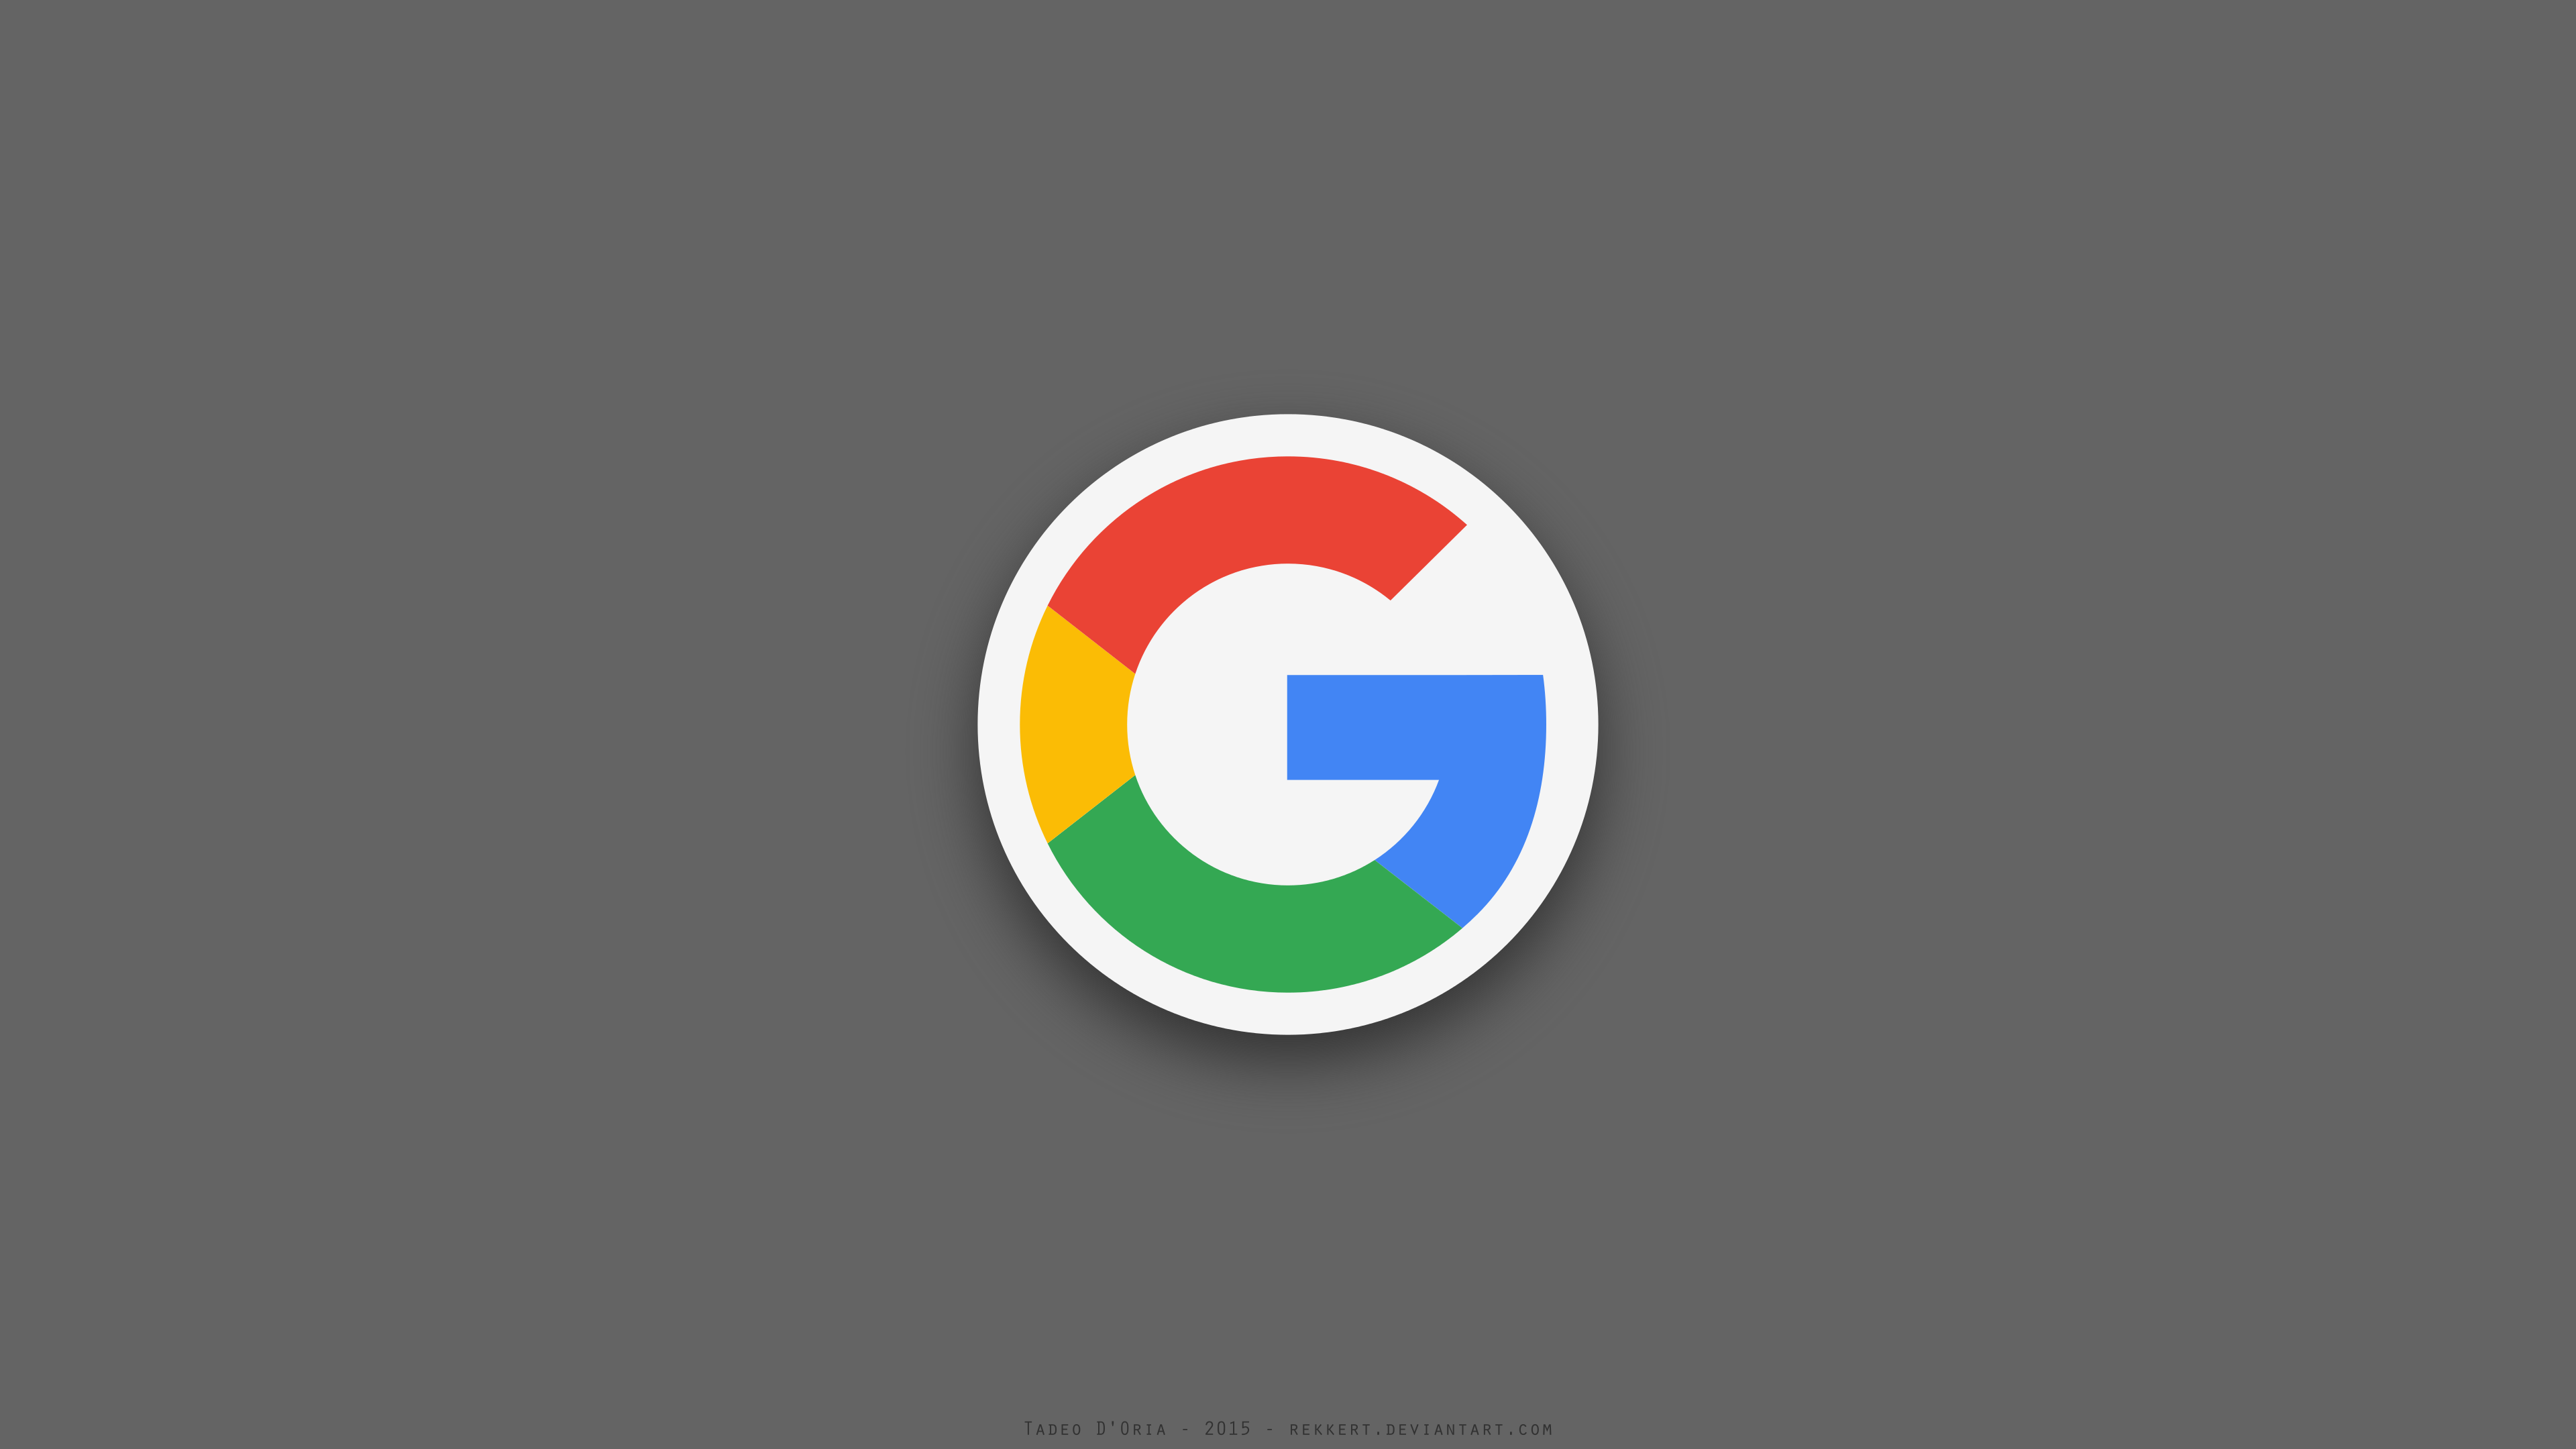 hd wallpaper Google_Logo_PSD_